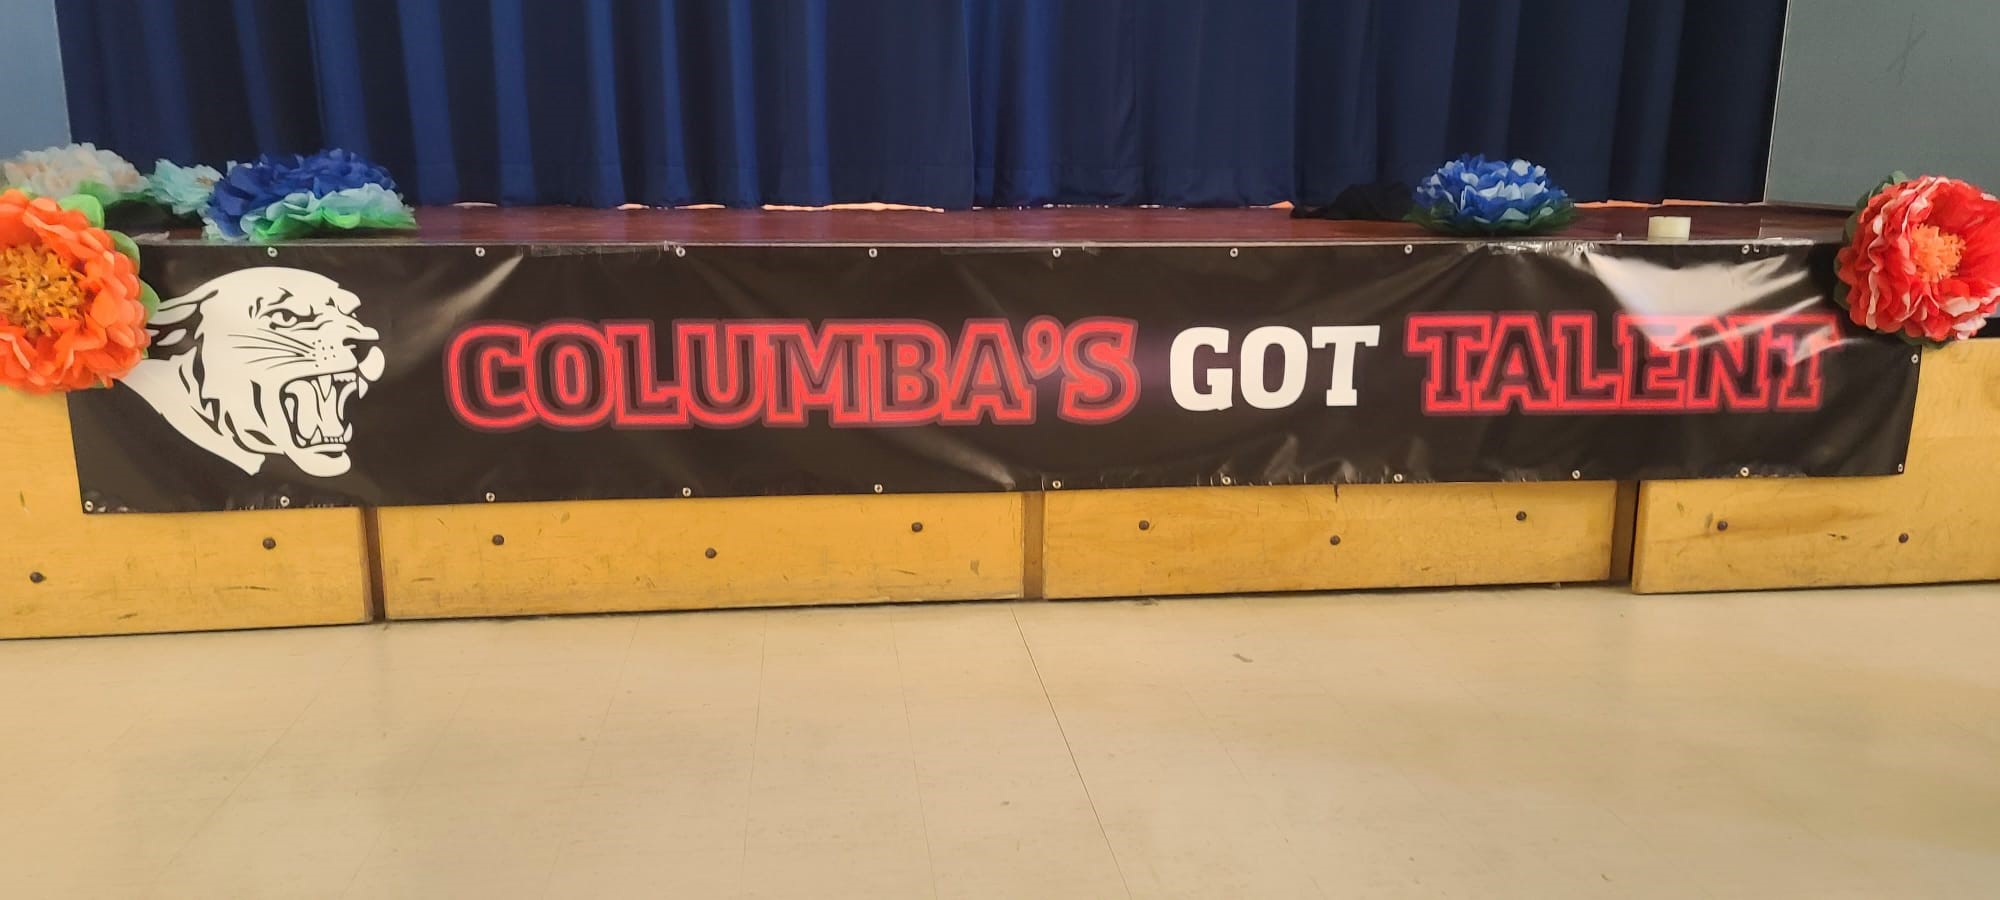 Columba's got talent display banner in the St. Columba auditorium